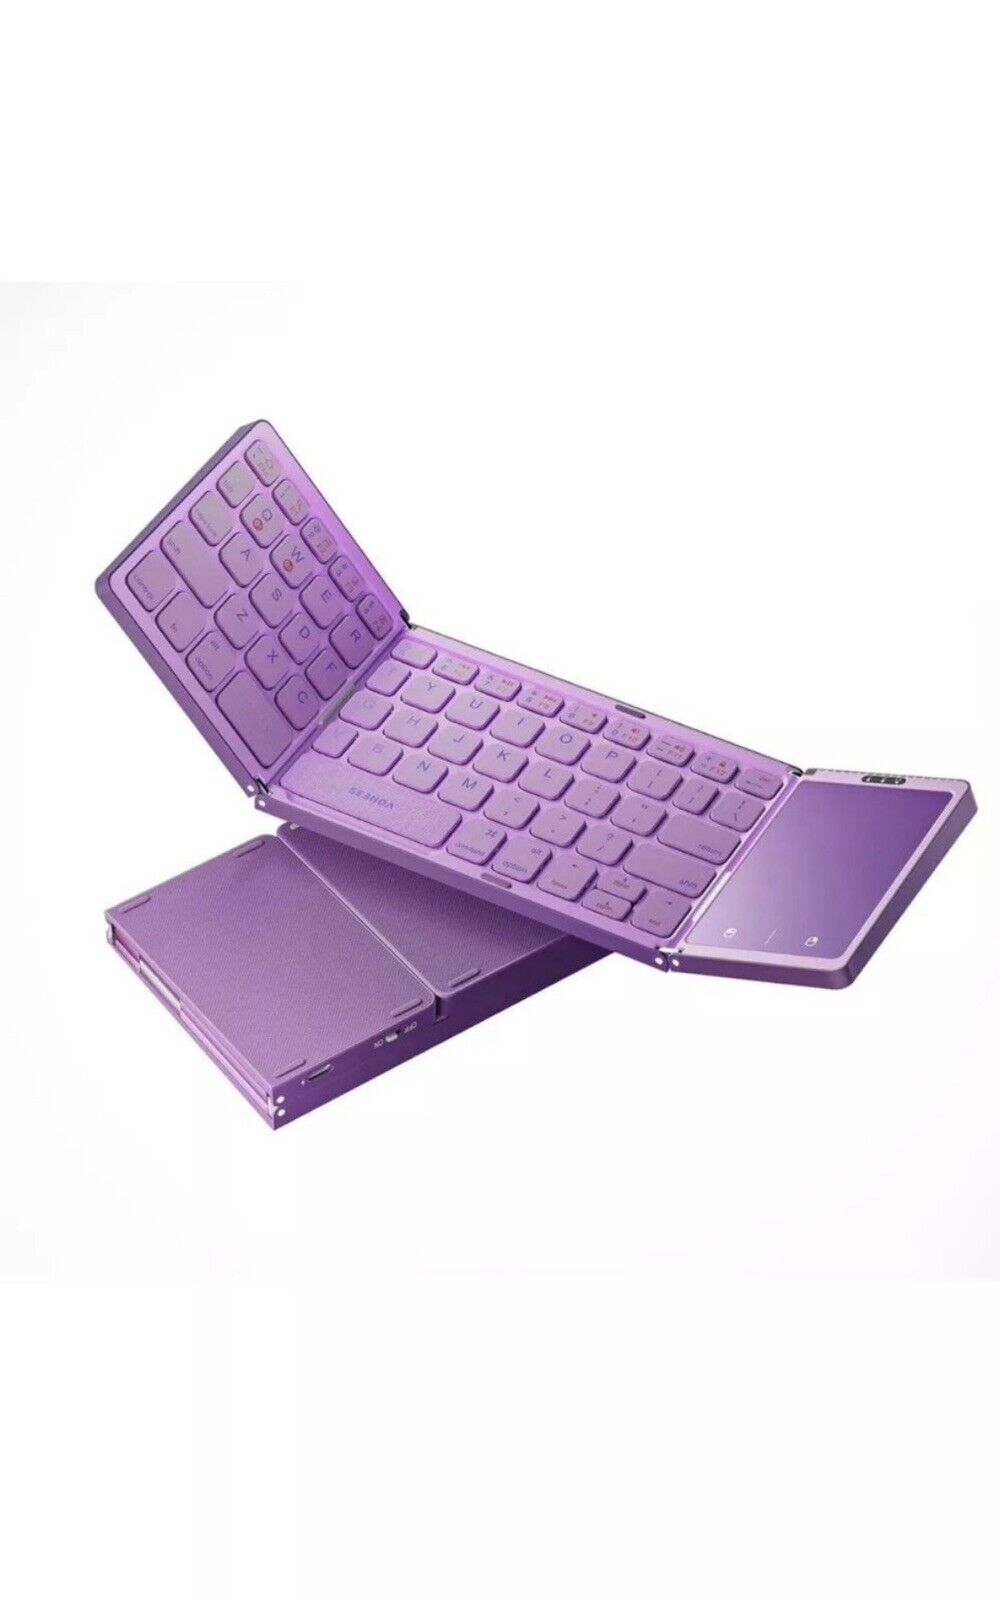 seenda Foldable Bluetooth Keyboard for Travel, Tri-Folding Wireless Portable